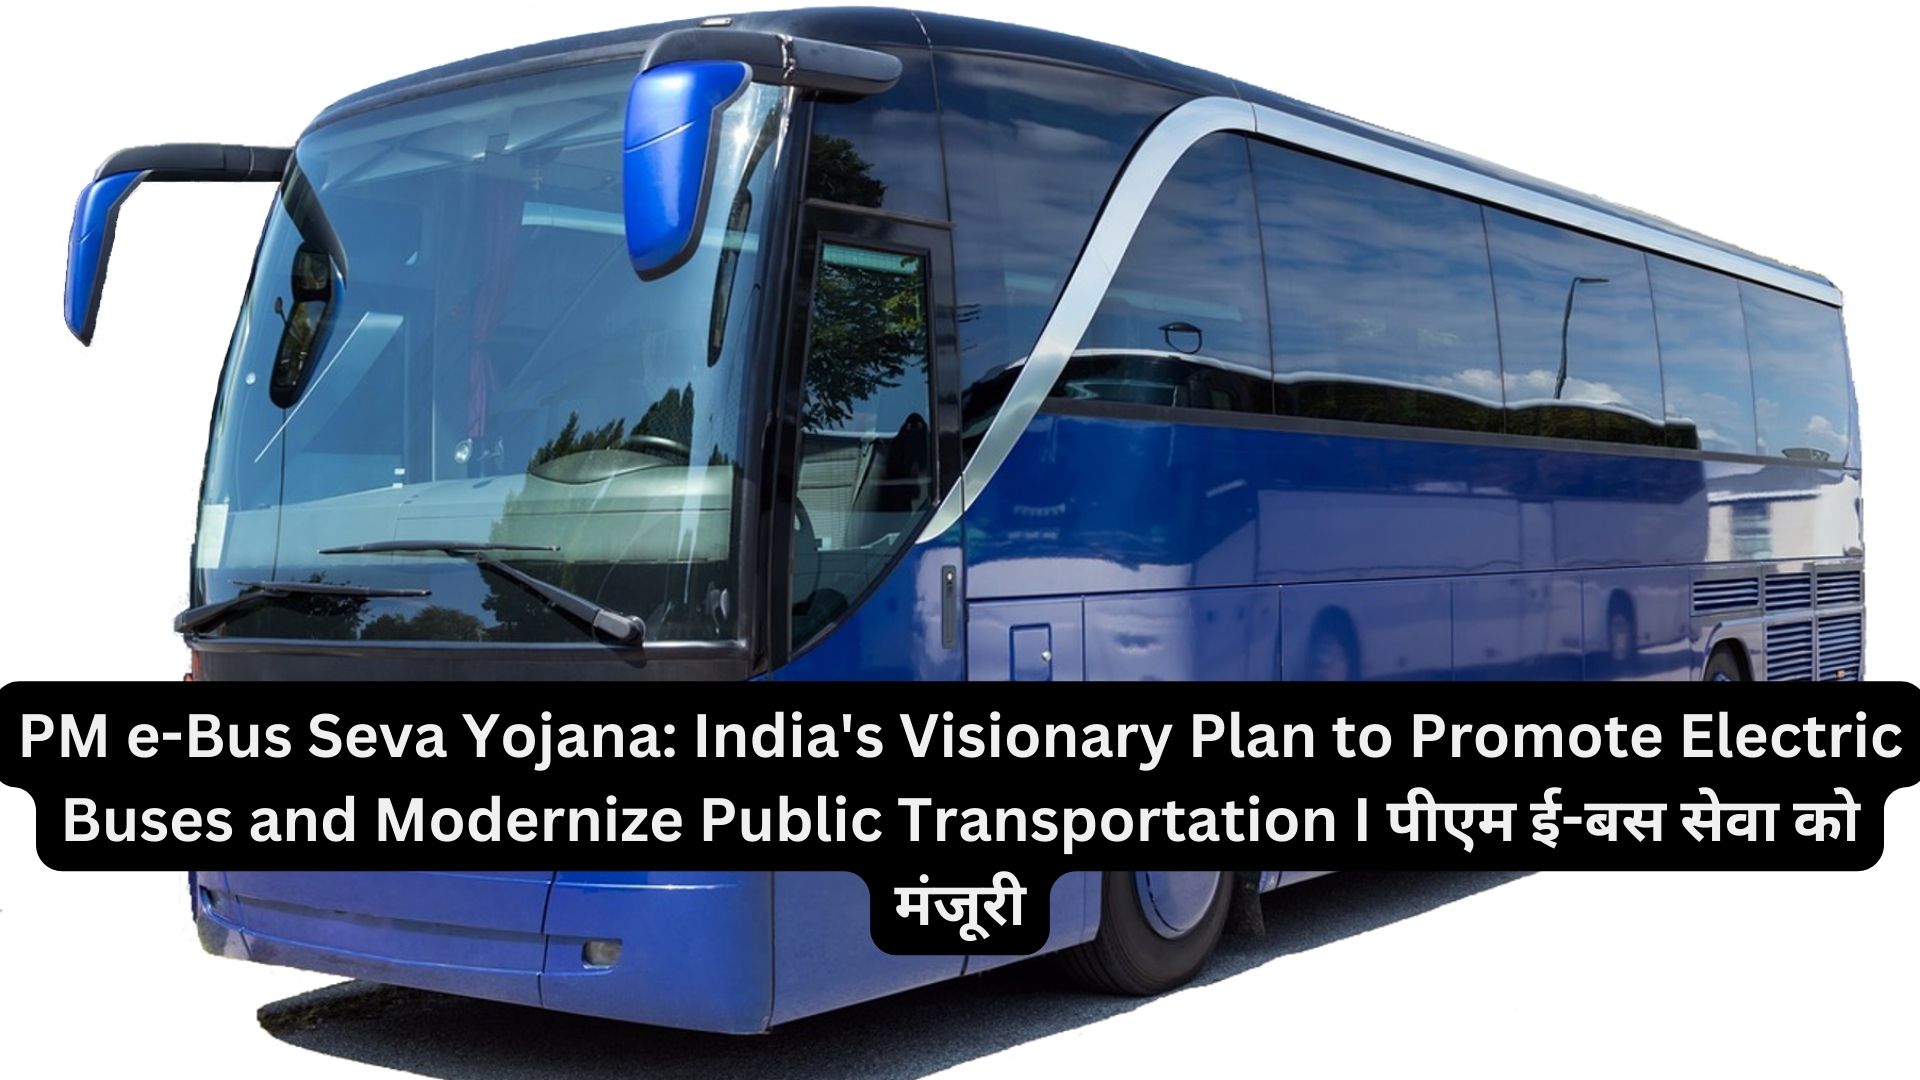 PM e-Bus Seva Yojana: India's Visionary Plan to Promote Electric Buses and Modernize Public Transportation I पीएम ई-बस सेवा को मंजूरी